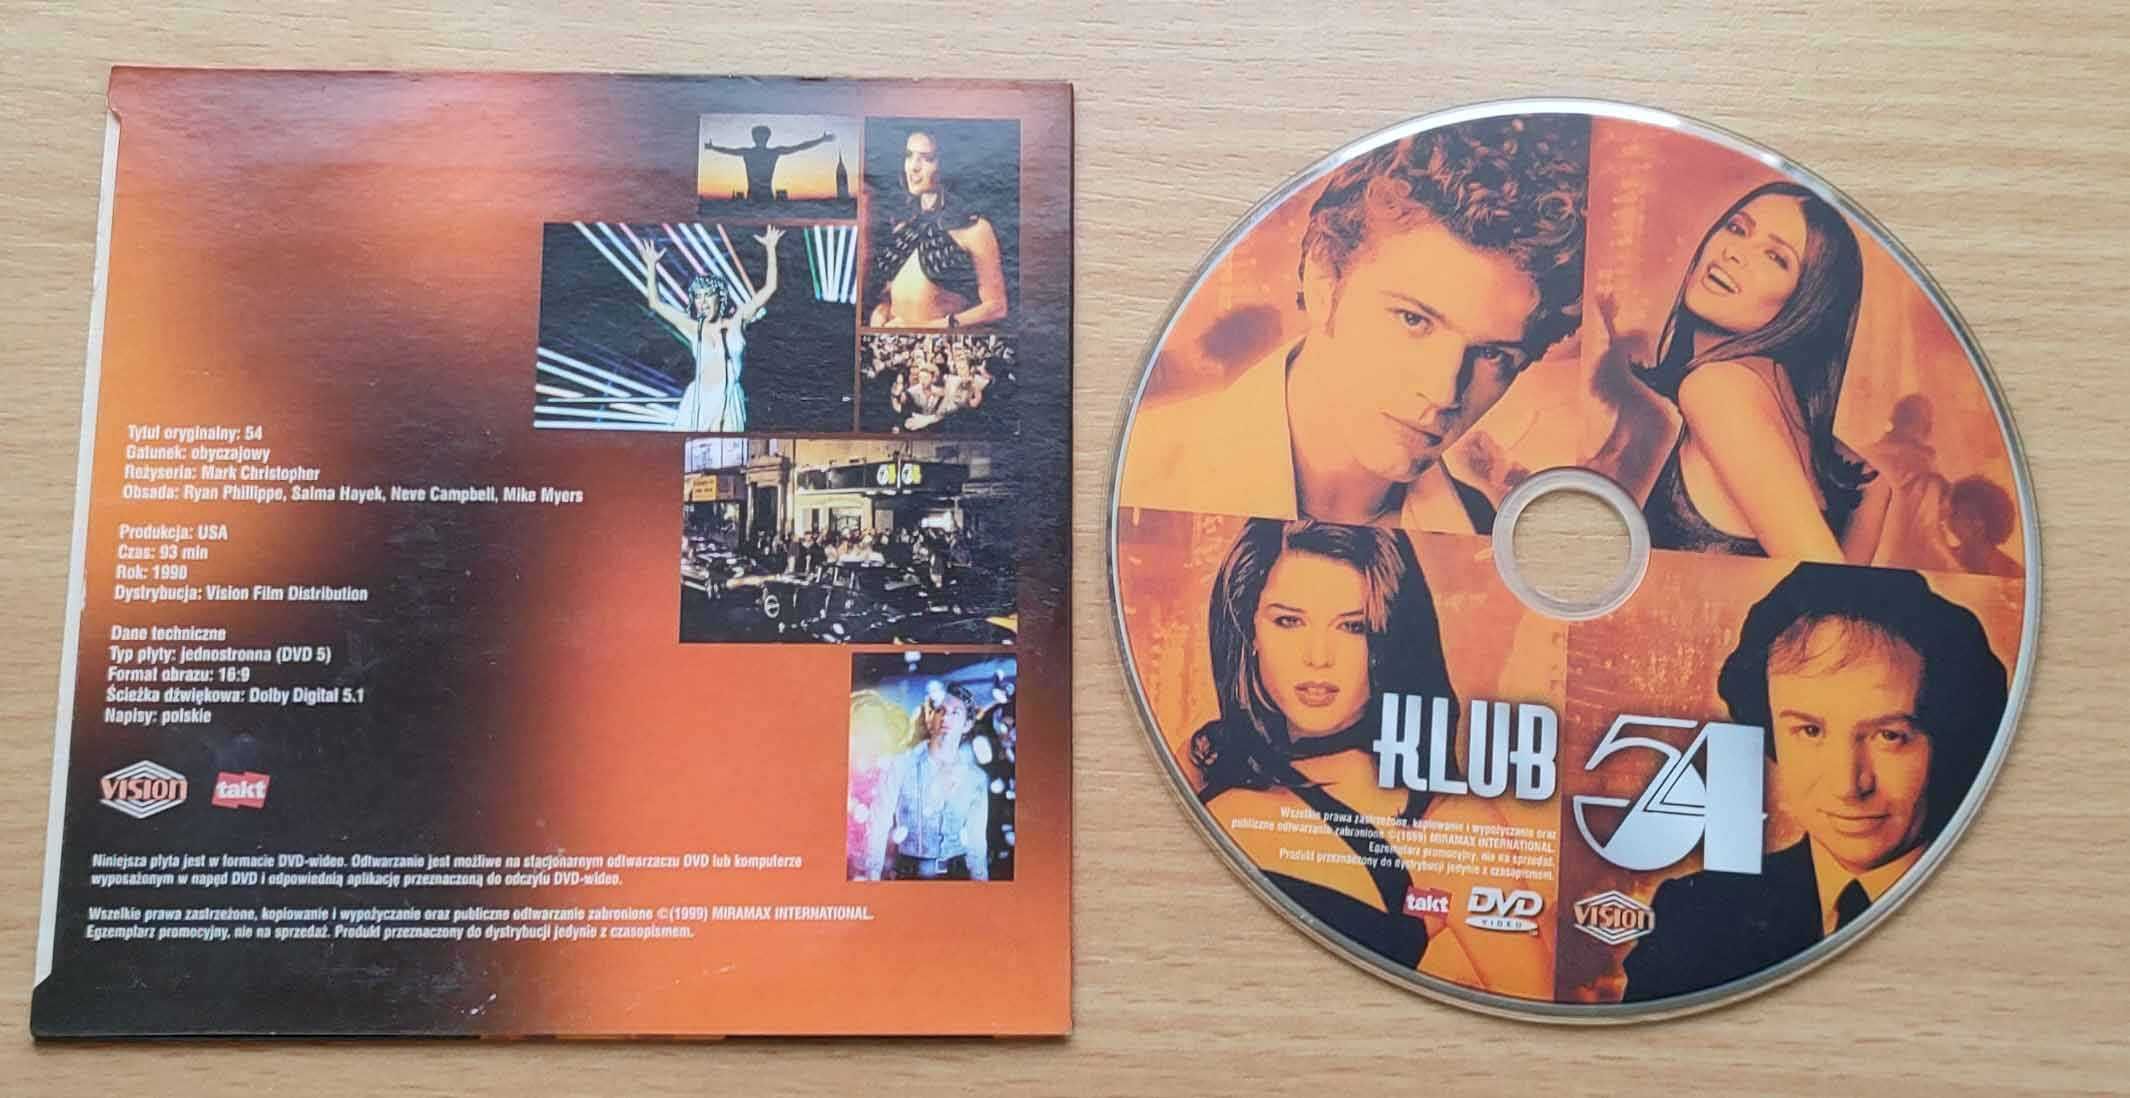 Klub 54 - film na płycie dvd - Salma Hayek, Ryan Phillippe ...